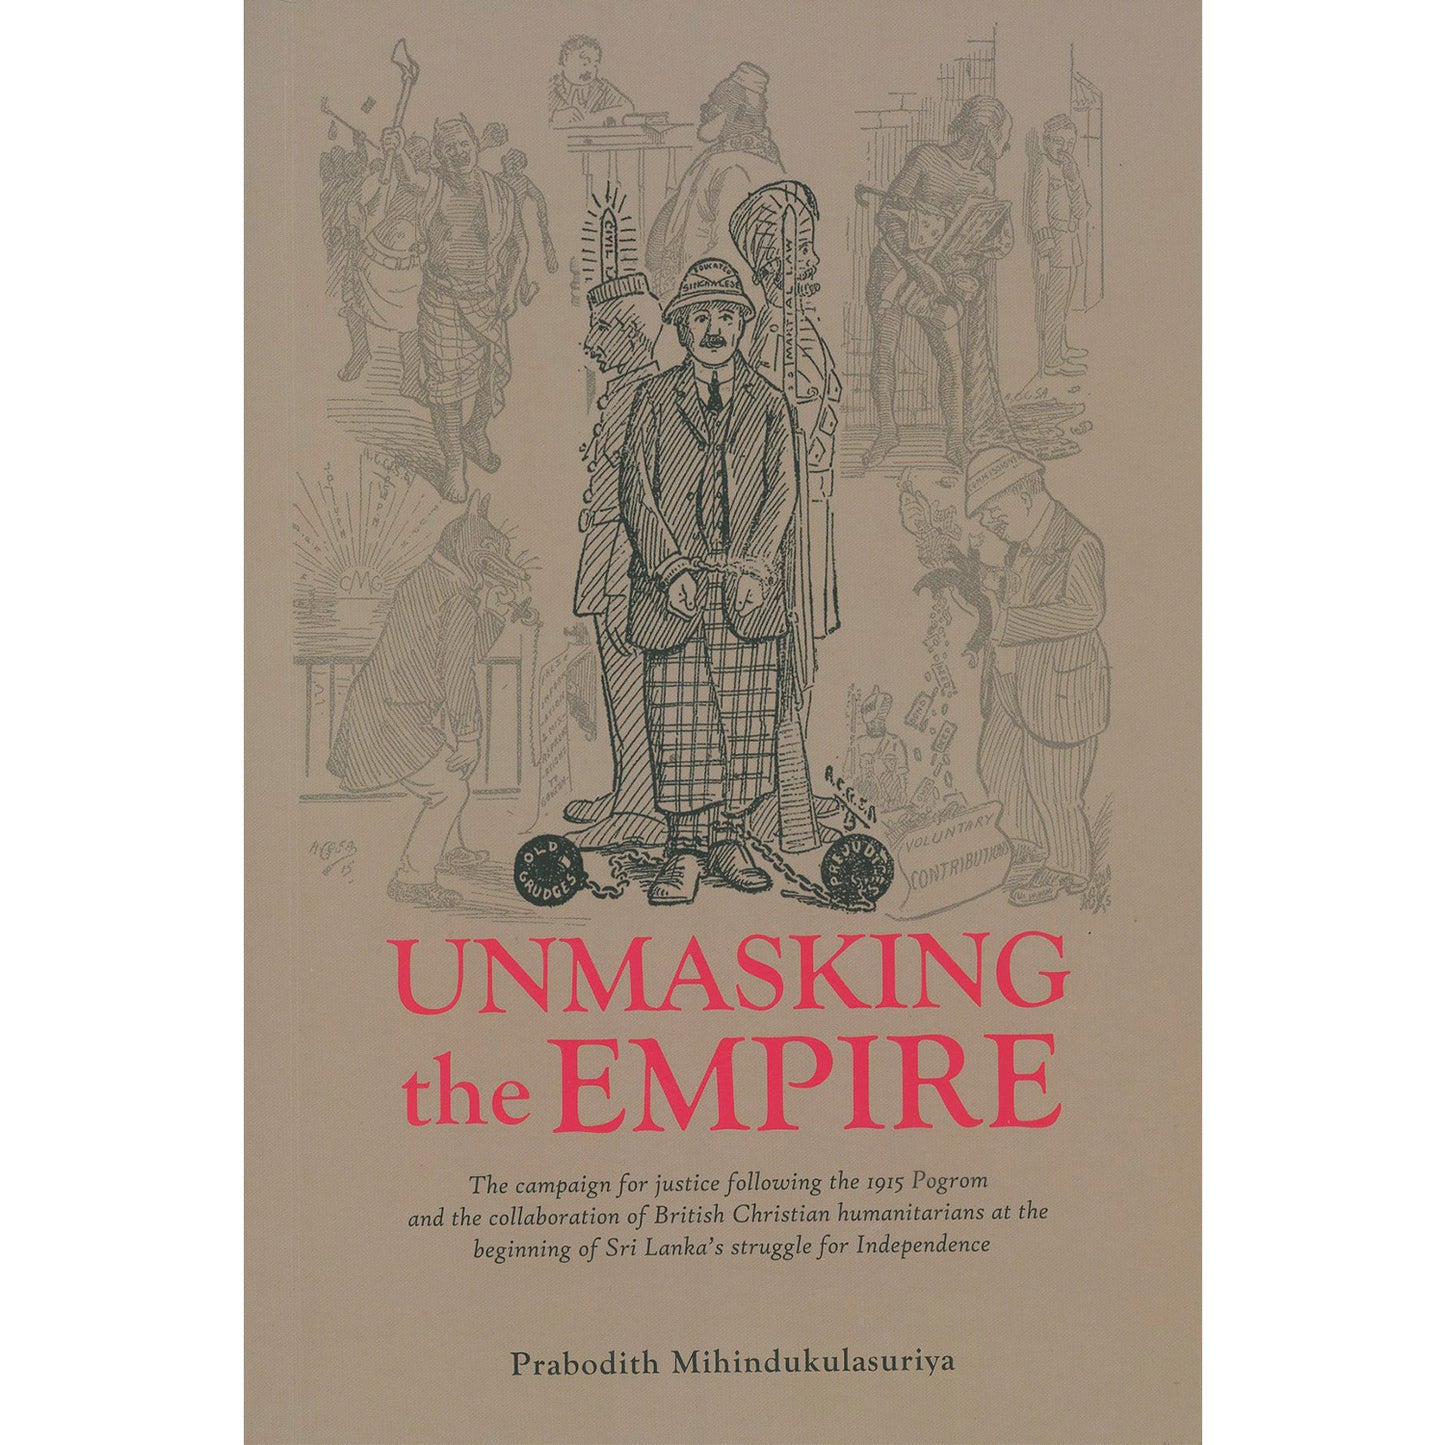 Unmasking the Empire by Prabodith Mihindukulasuriya